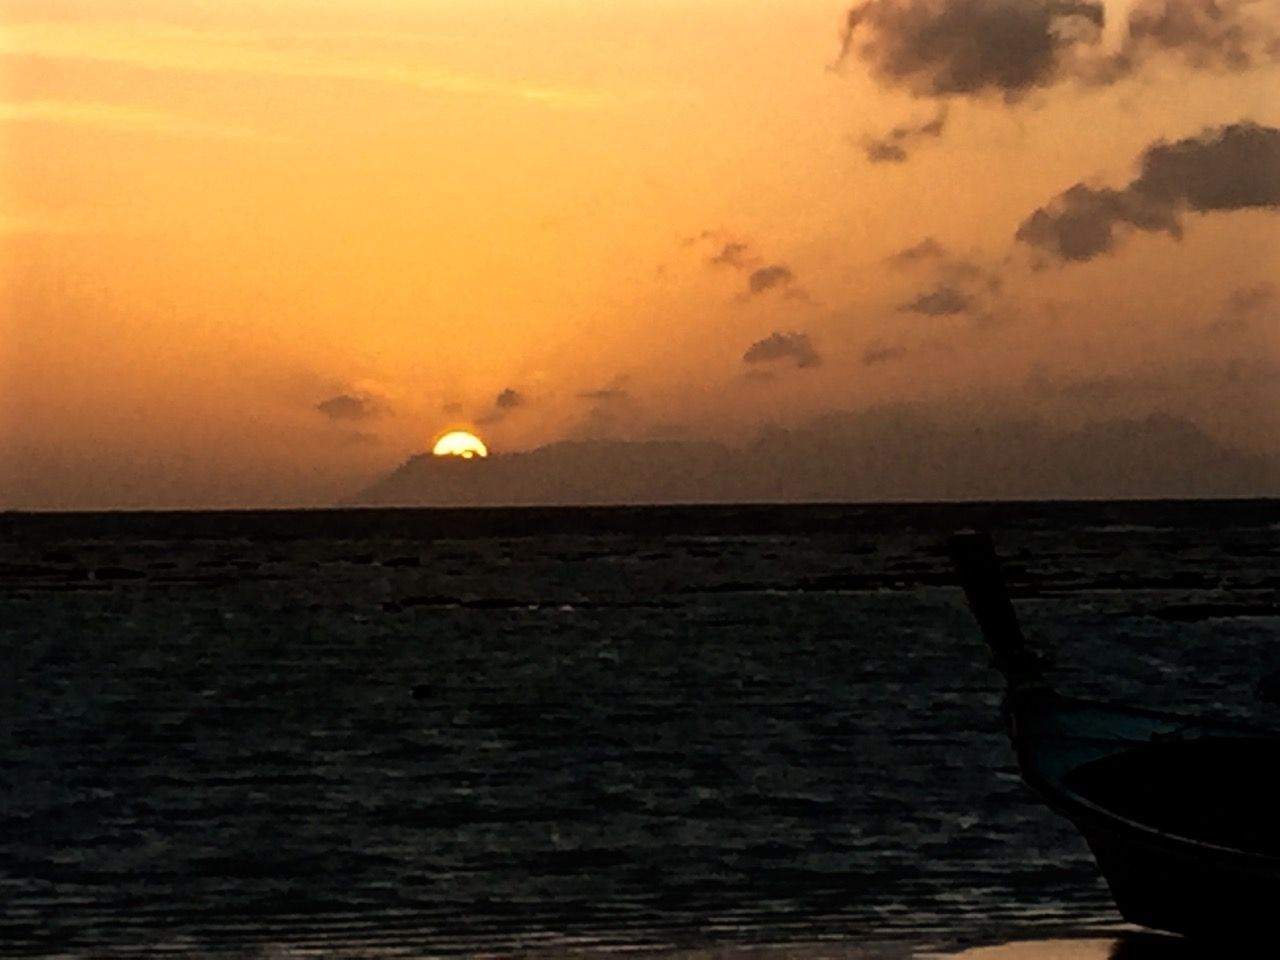 The sun rising from behind a far-away island.